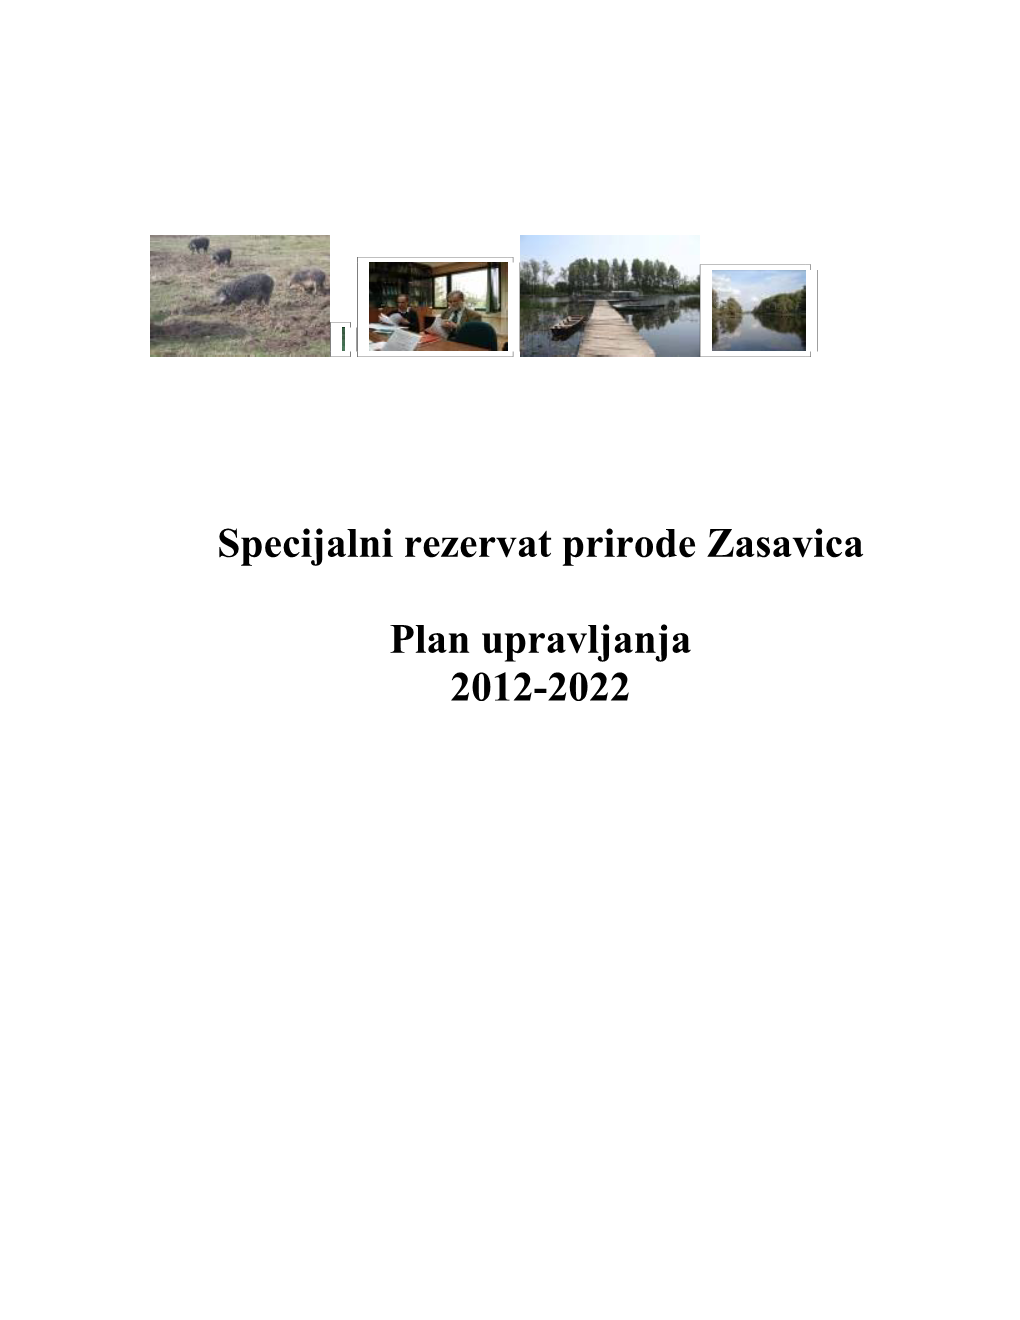 Plan Upravljanja 2012-2022